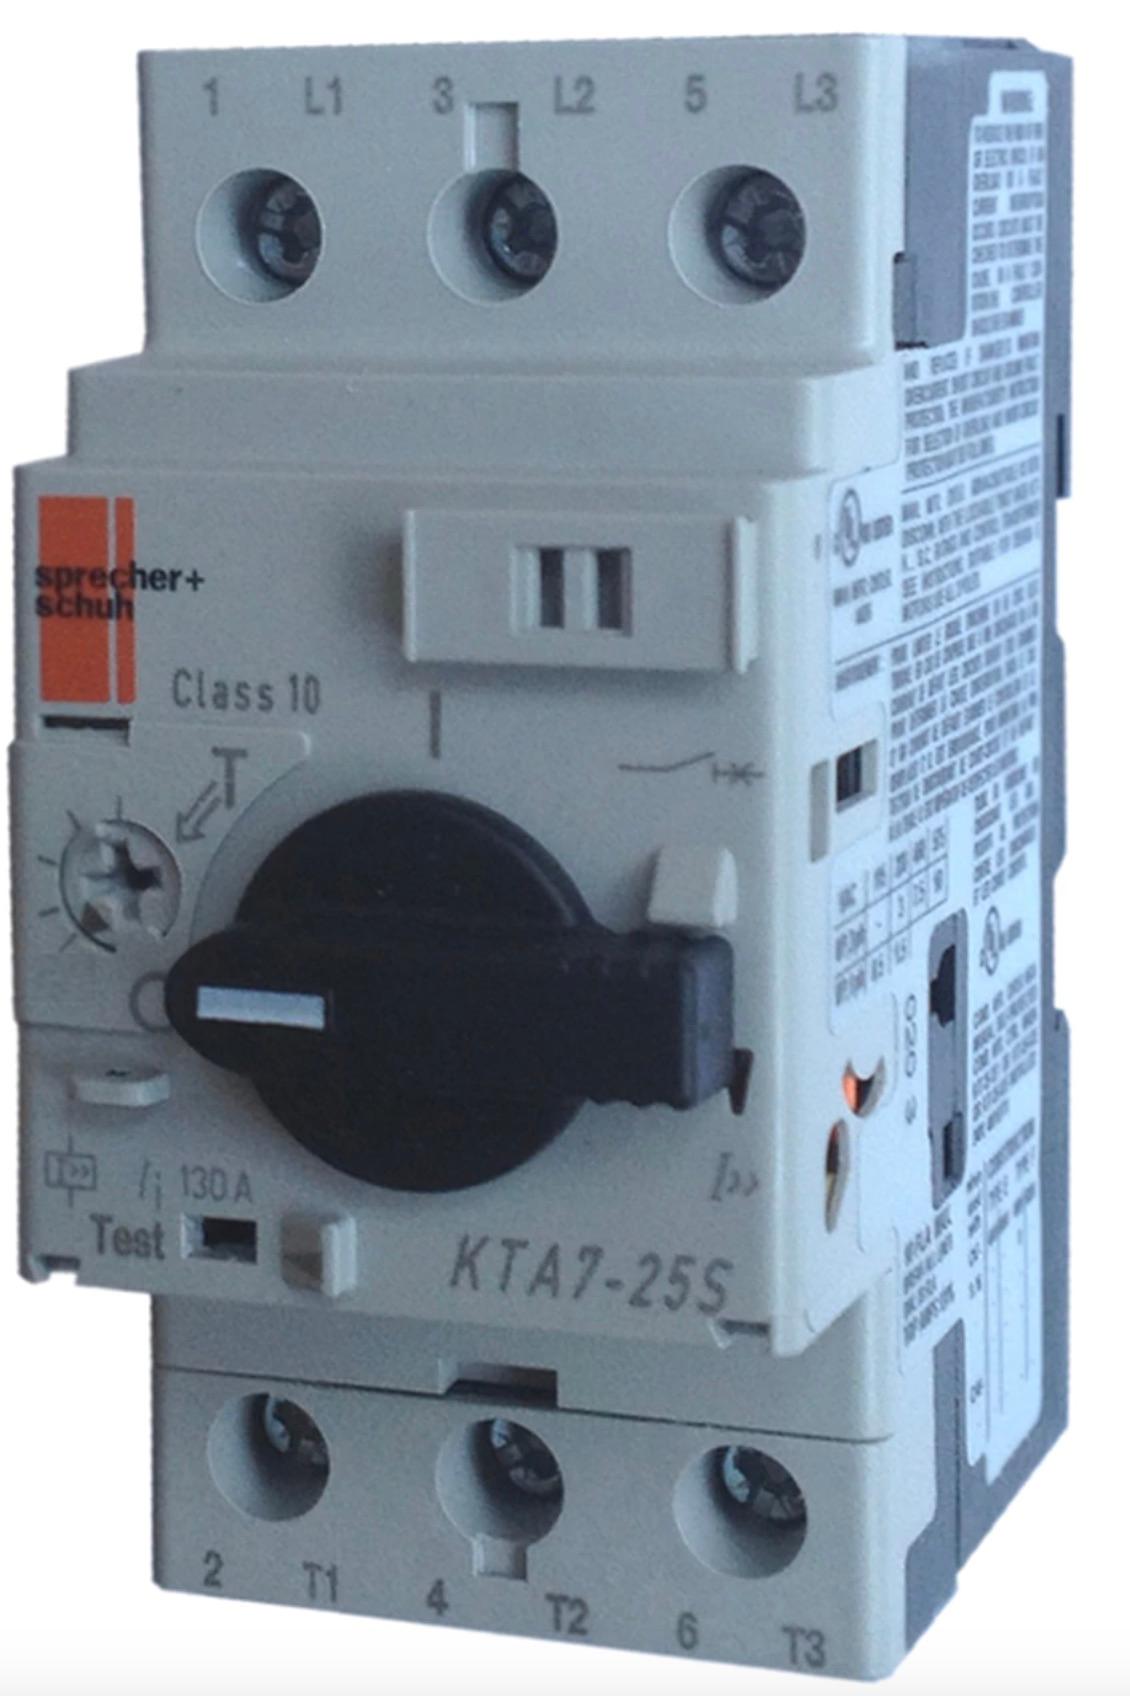 Sprecher + Schuh KTA7-25S-0.63A Manual motor controller, 8.2 Amps, 0.40...0.63 A Current Adjustment Range , Standard Interrupting Capacity